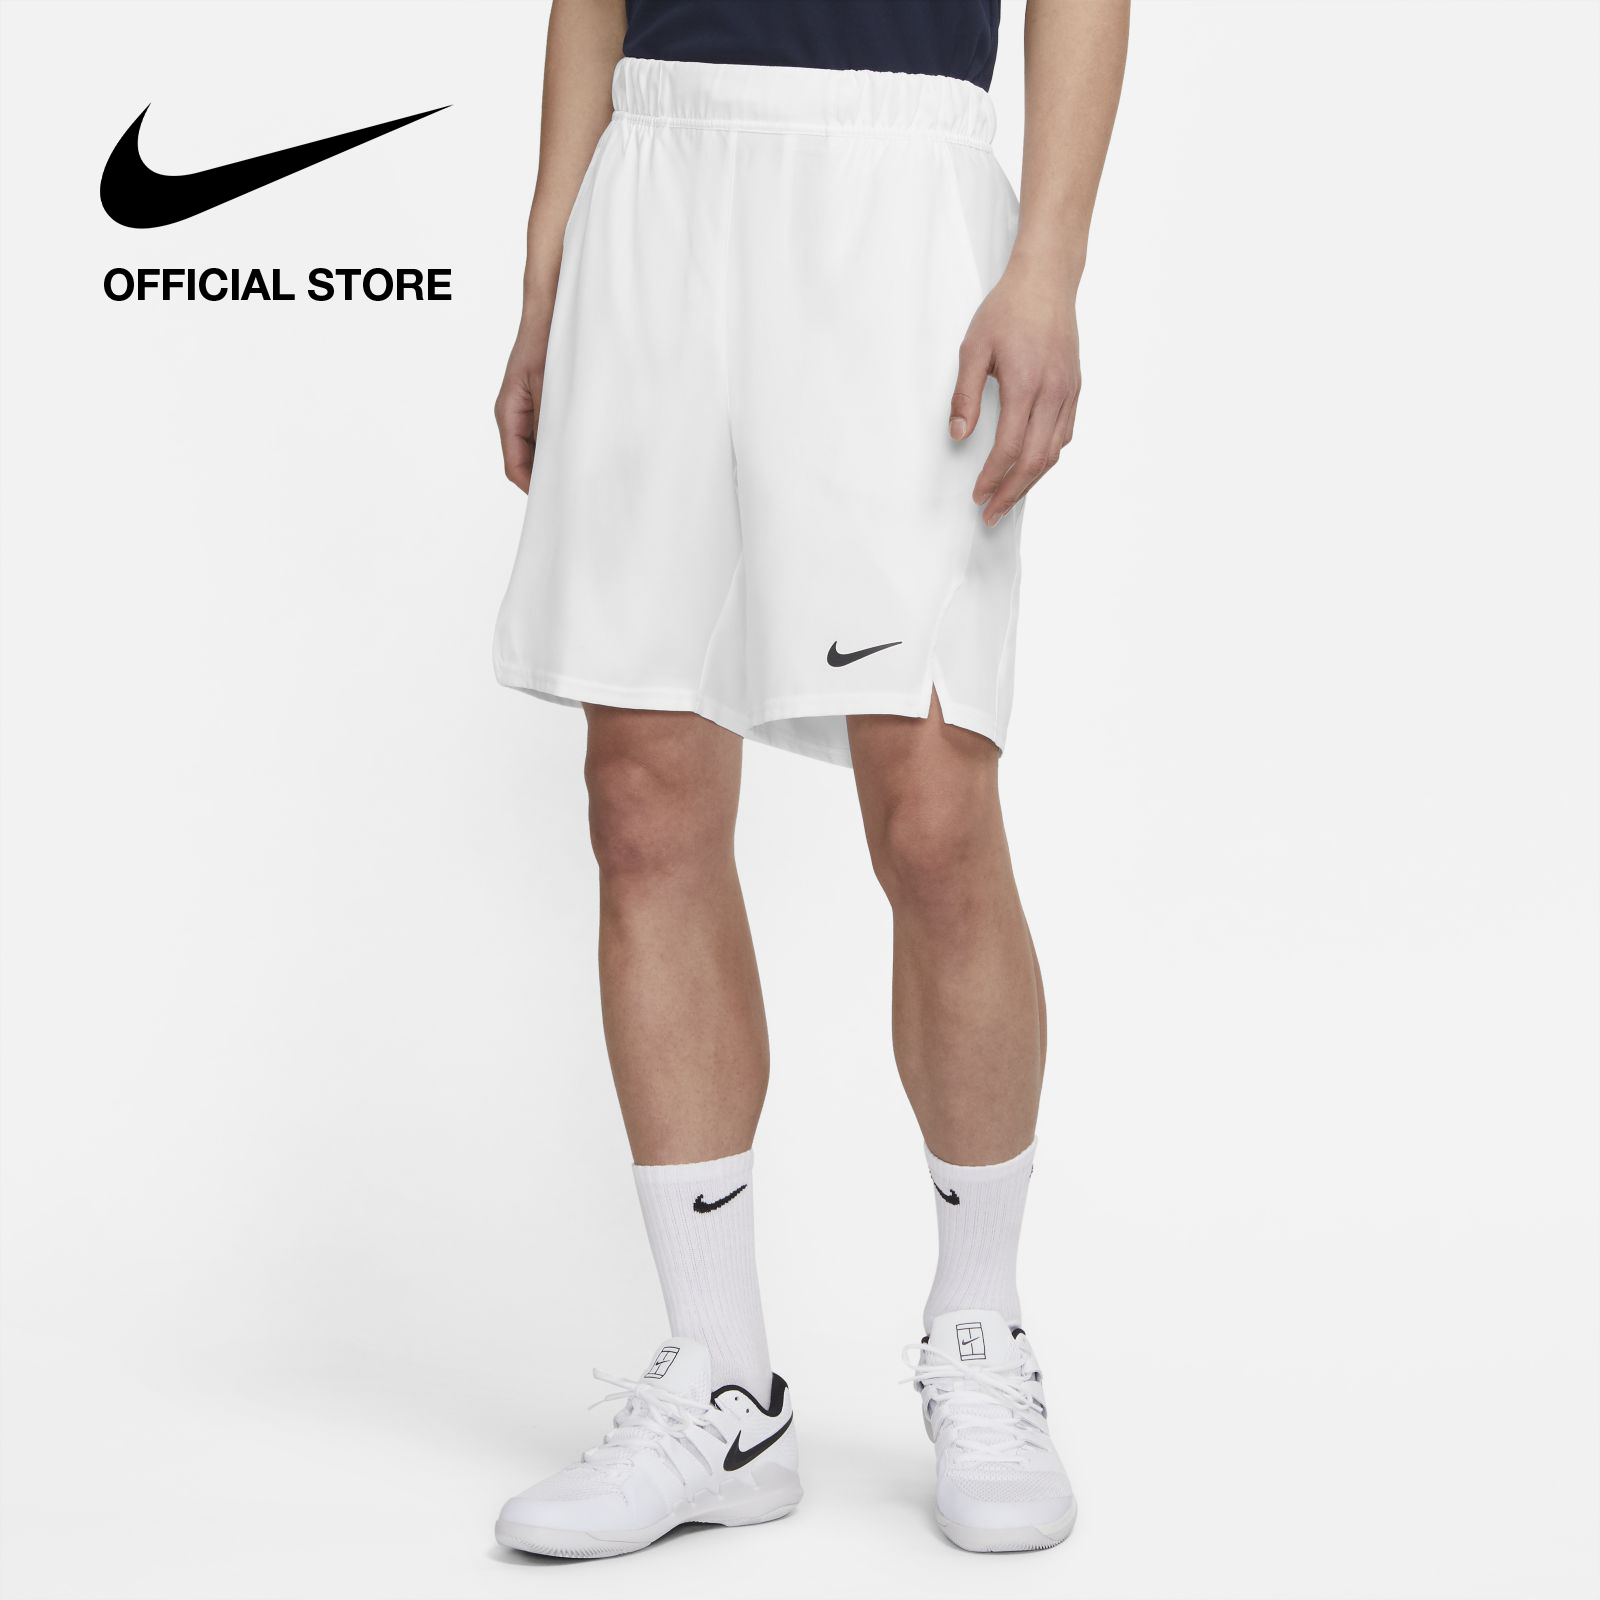 Tennis Shorts: White